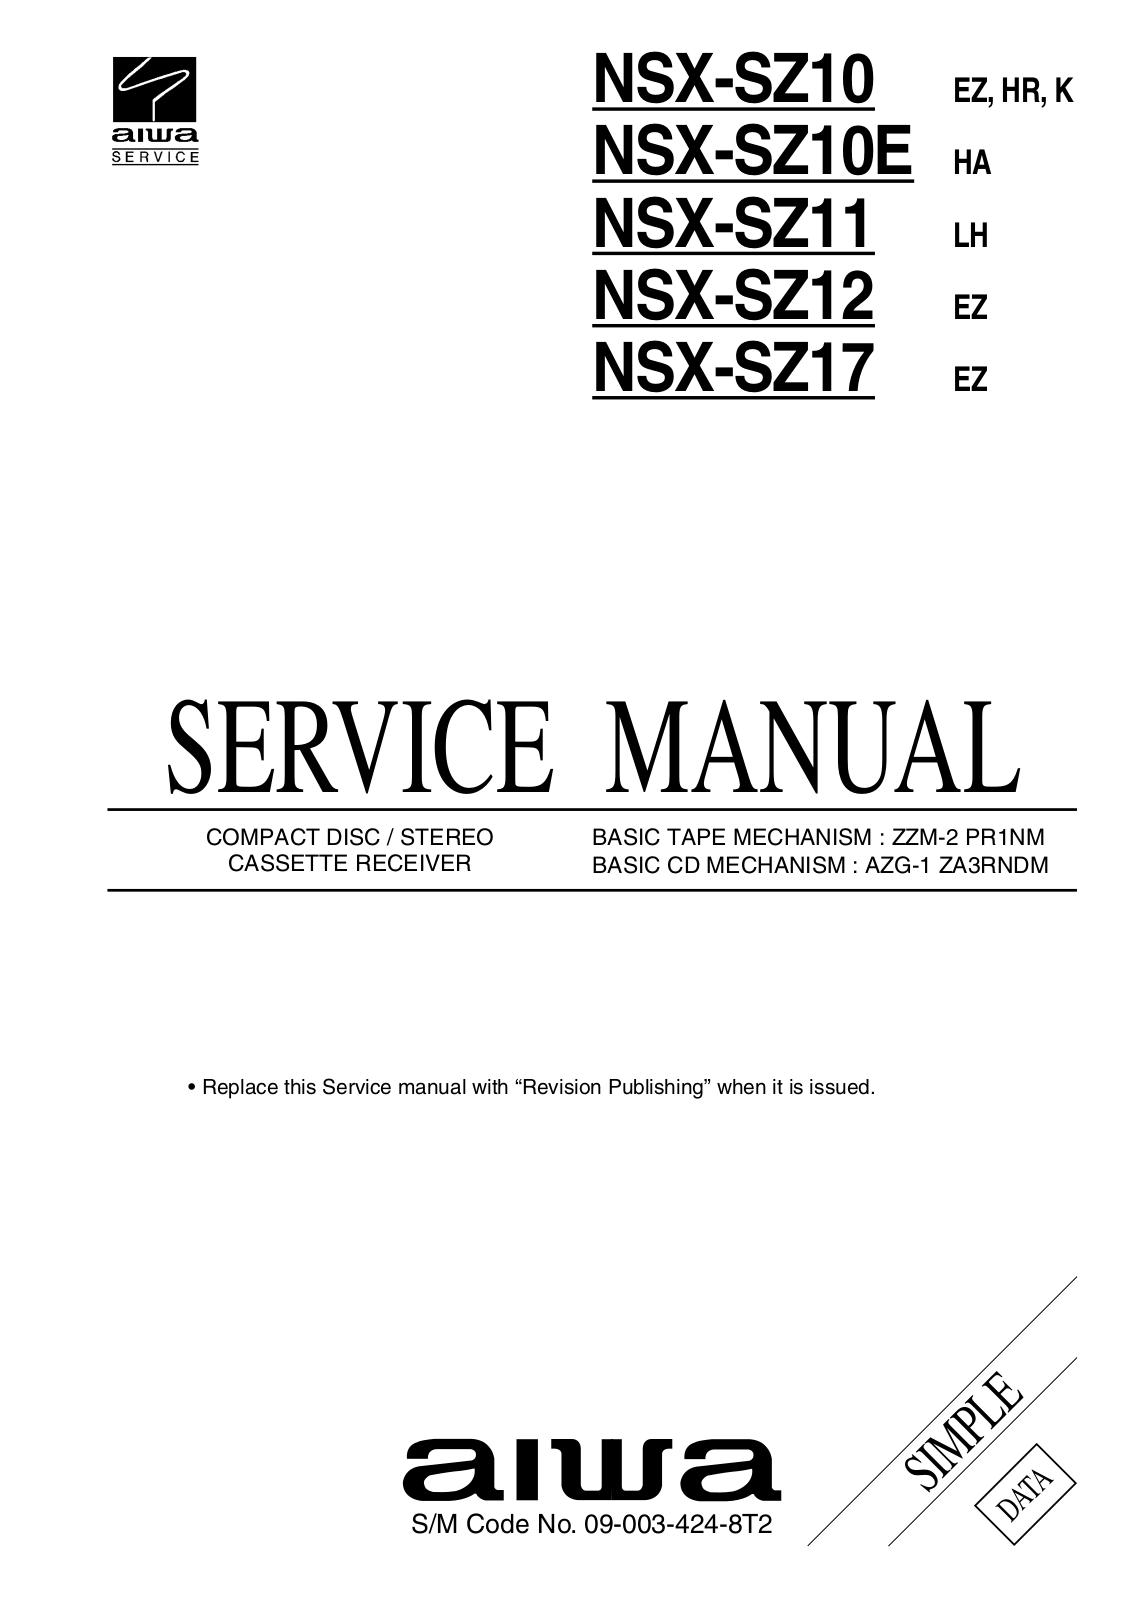 Aiwa NSX-SZ17  EZ, NSX-SZ12  EZ, NSX-SZ11  LH, NSX-SZ10 K, NSX-SZ10E HA Service Manual